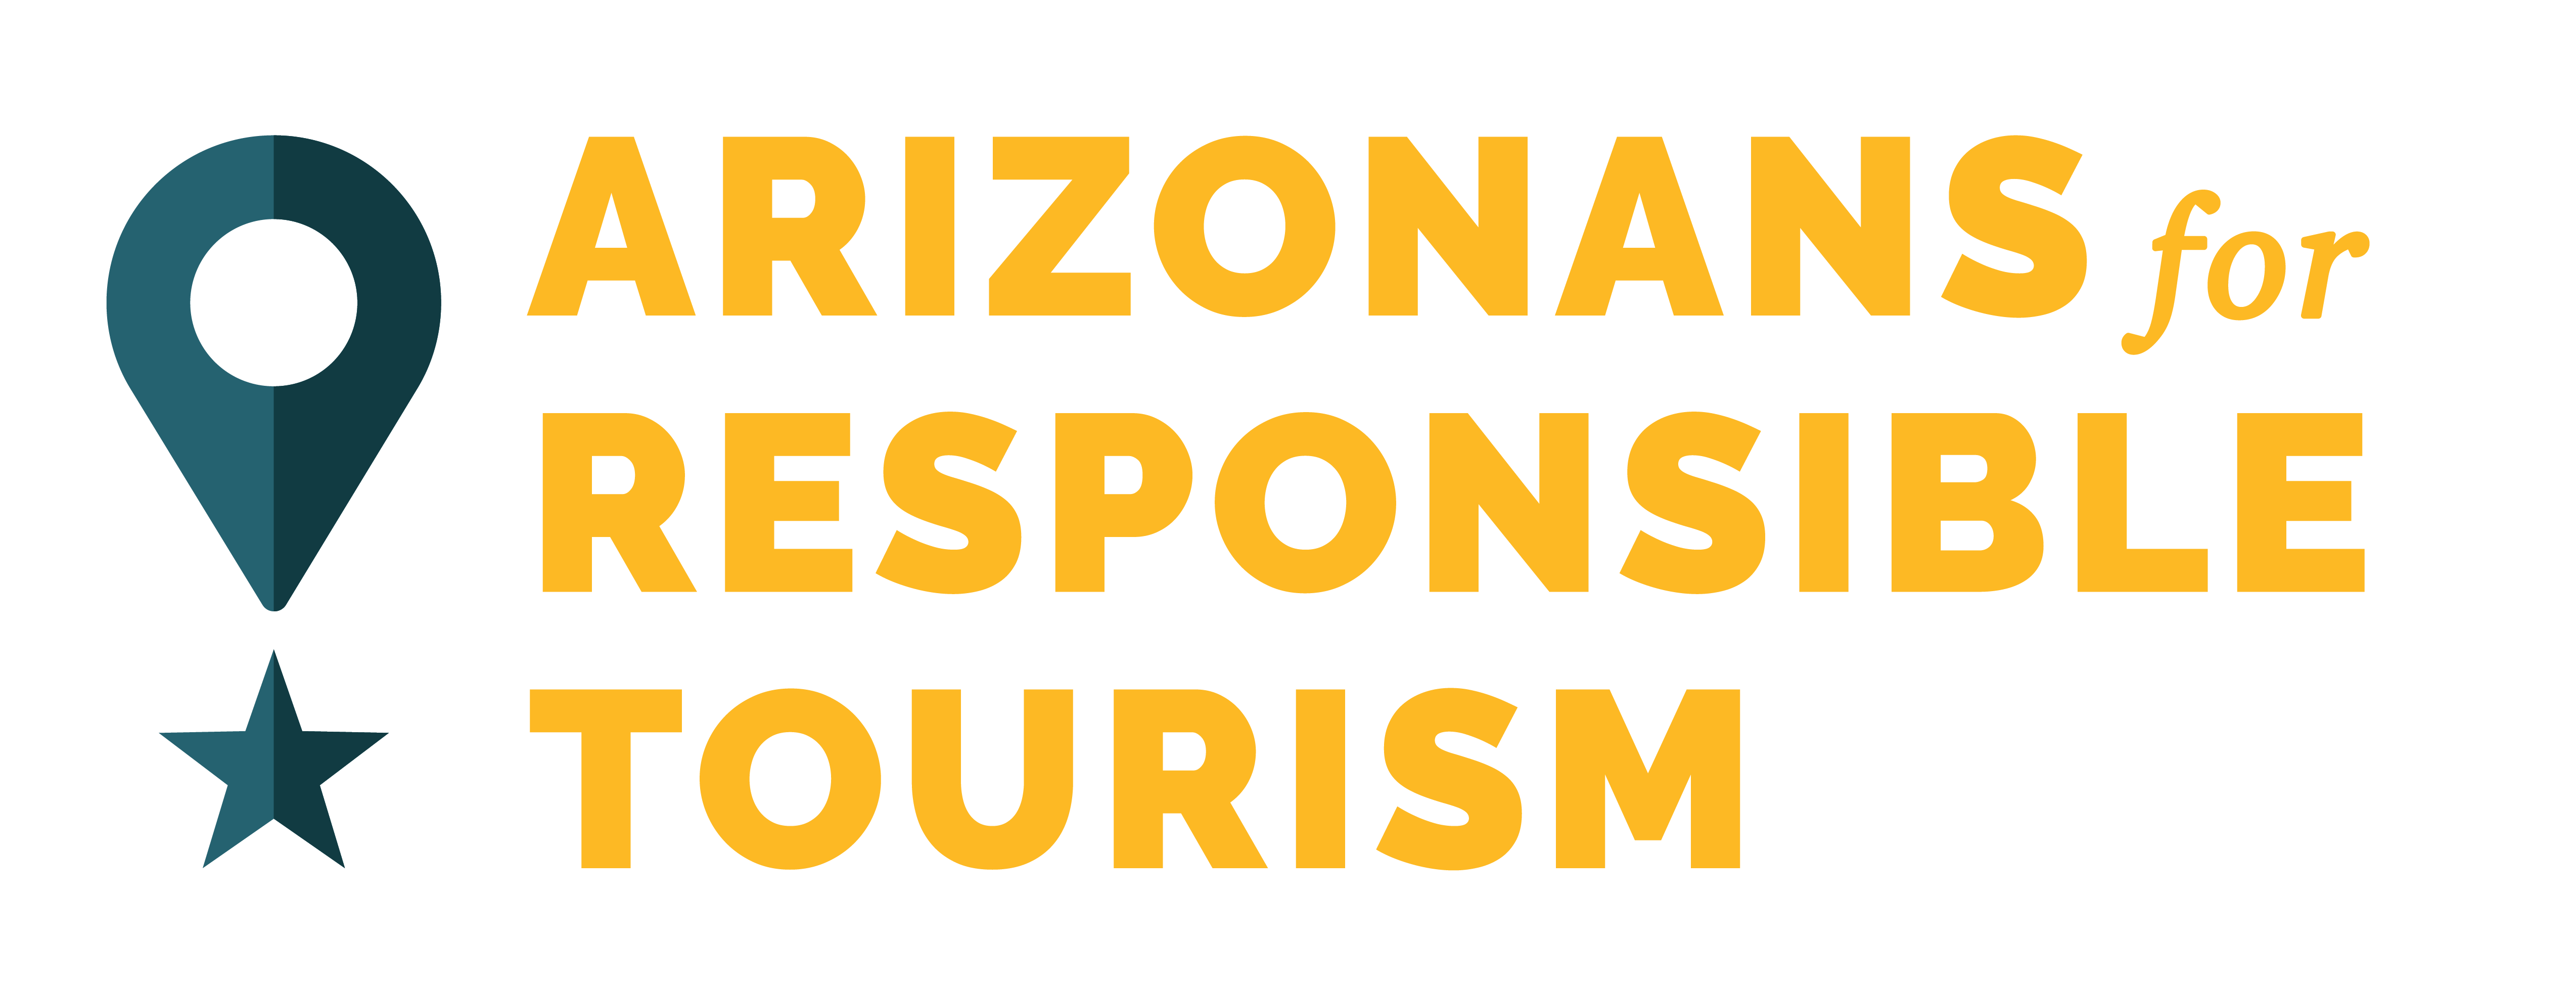 Arizonans for Responsible Tourism